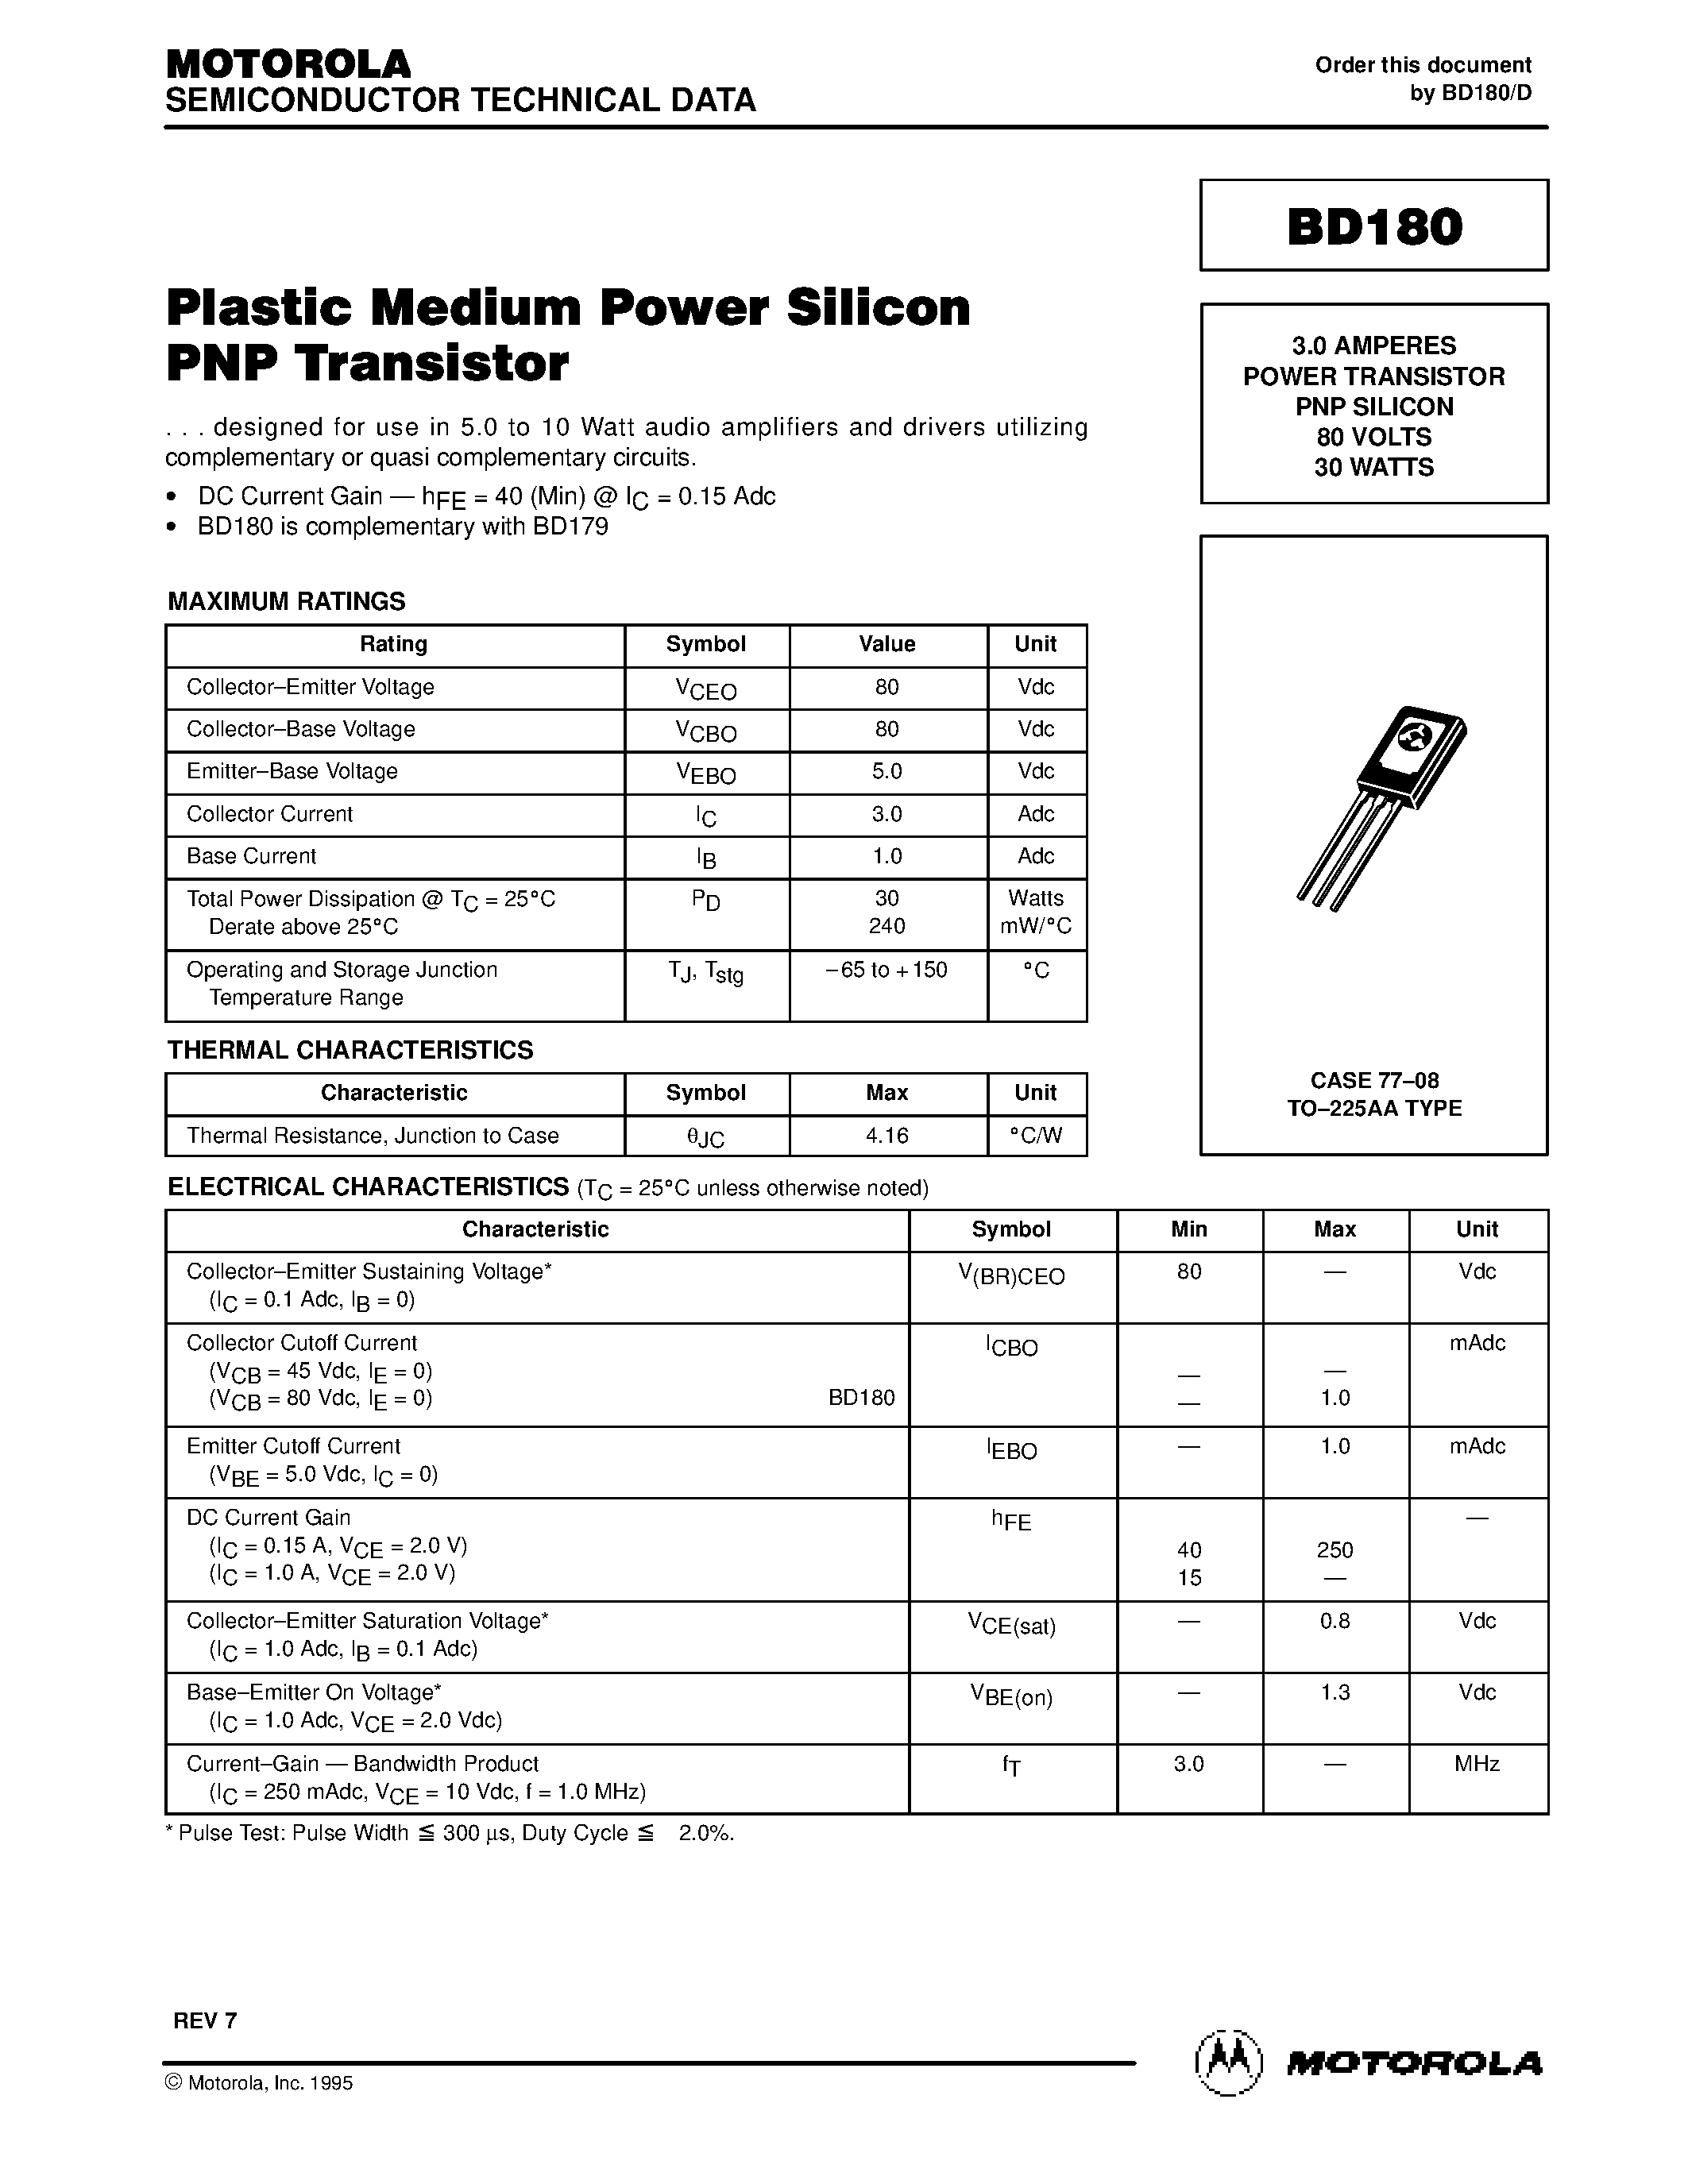 Даташит BD180 - Plastic Medium Power Silicon PNP Transistor страница 1